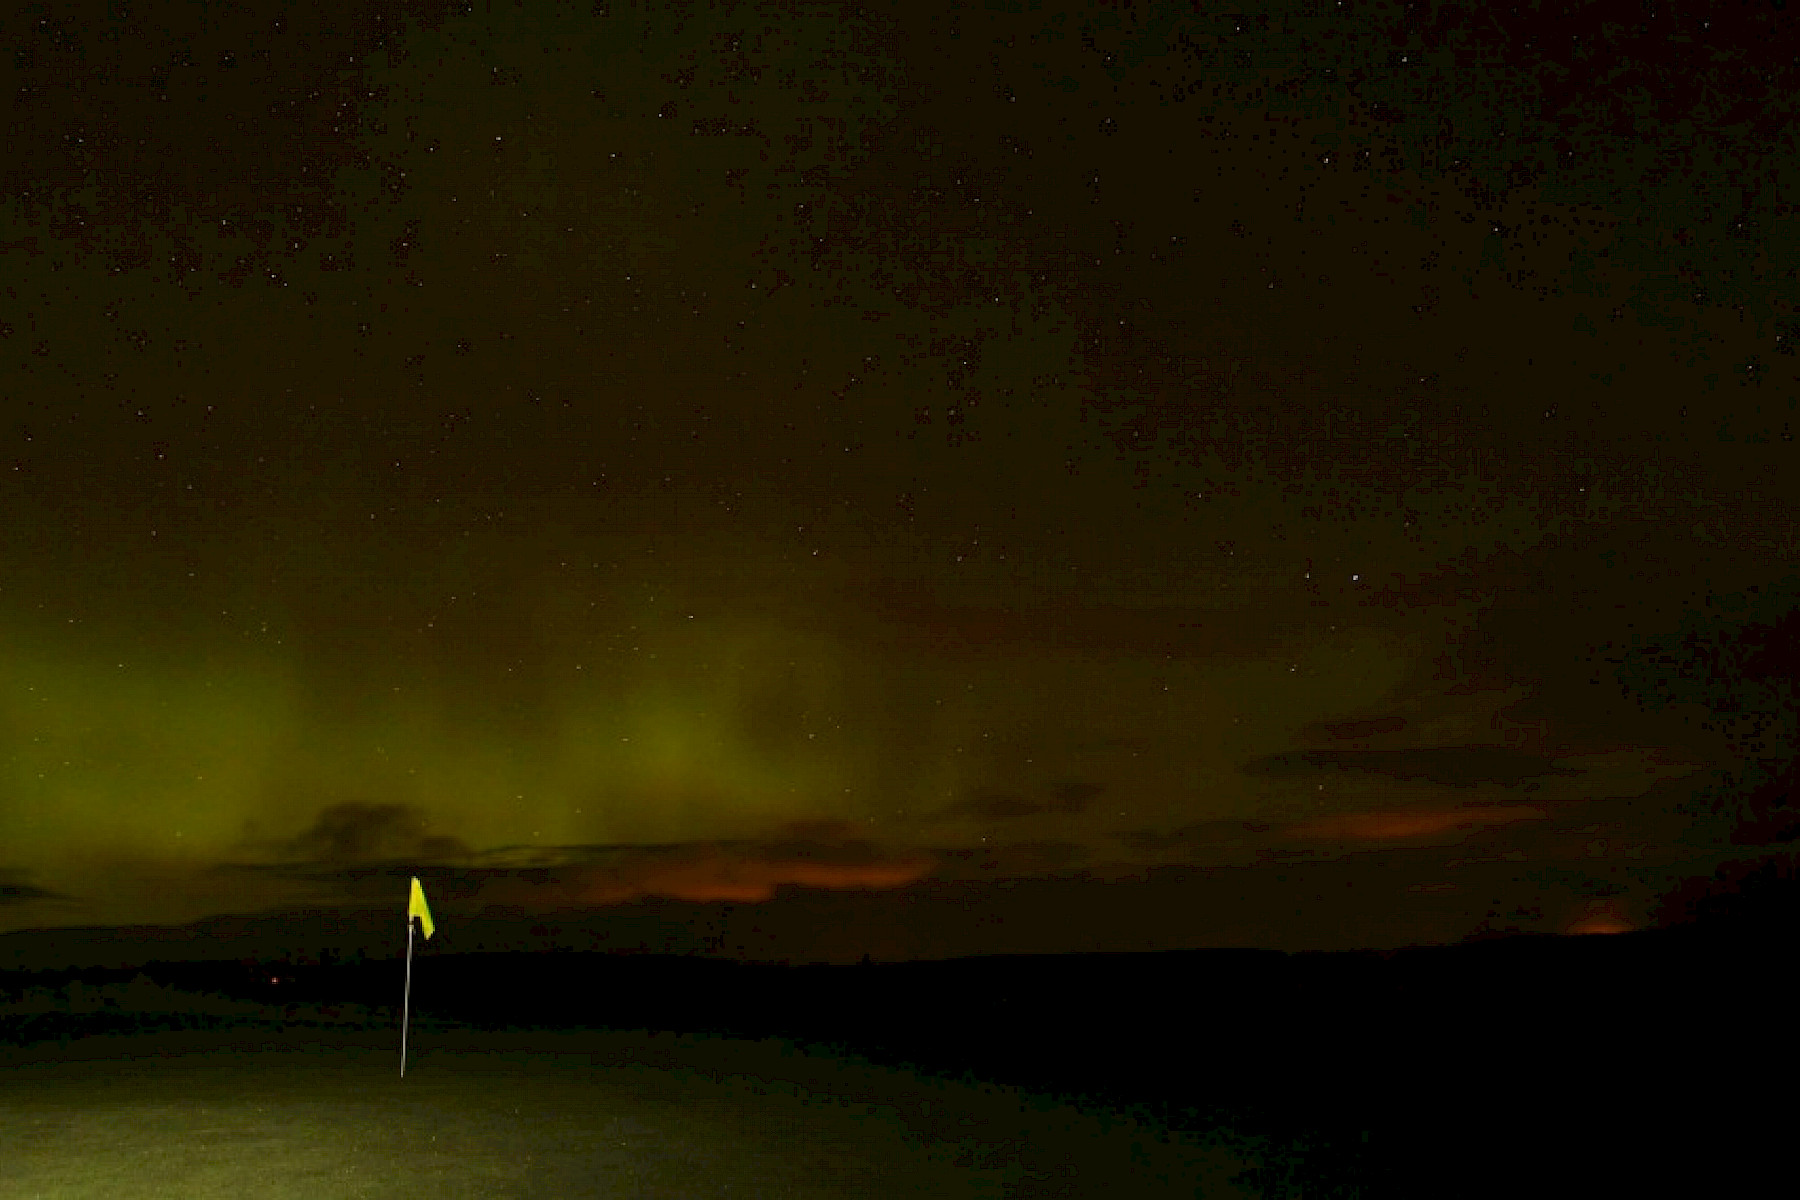 Dornoch image: Aurora Borealis glows in night sky over golf course flag